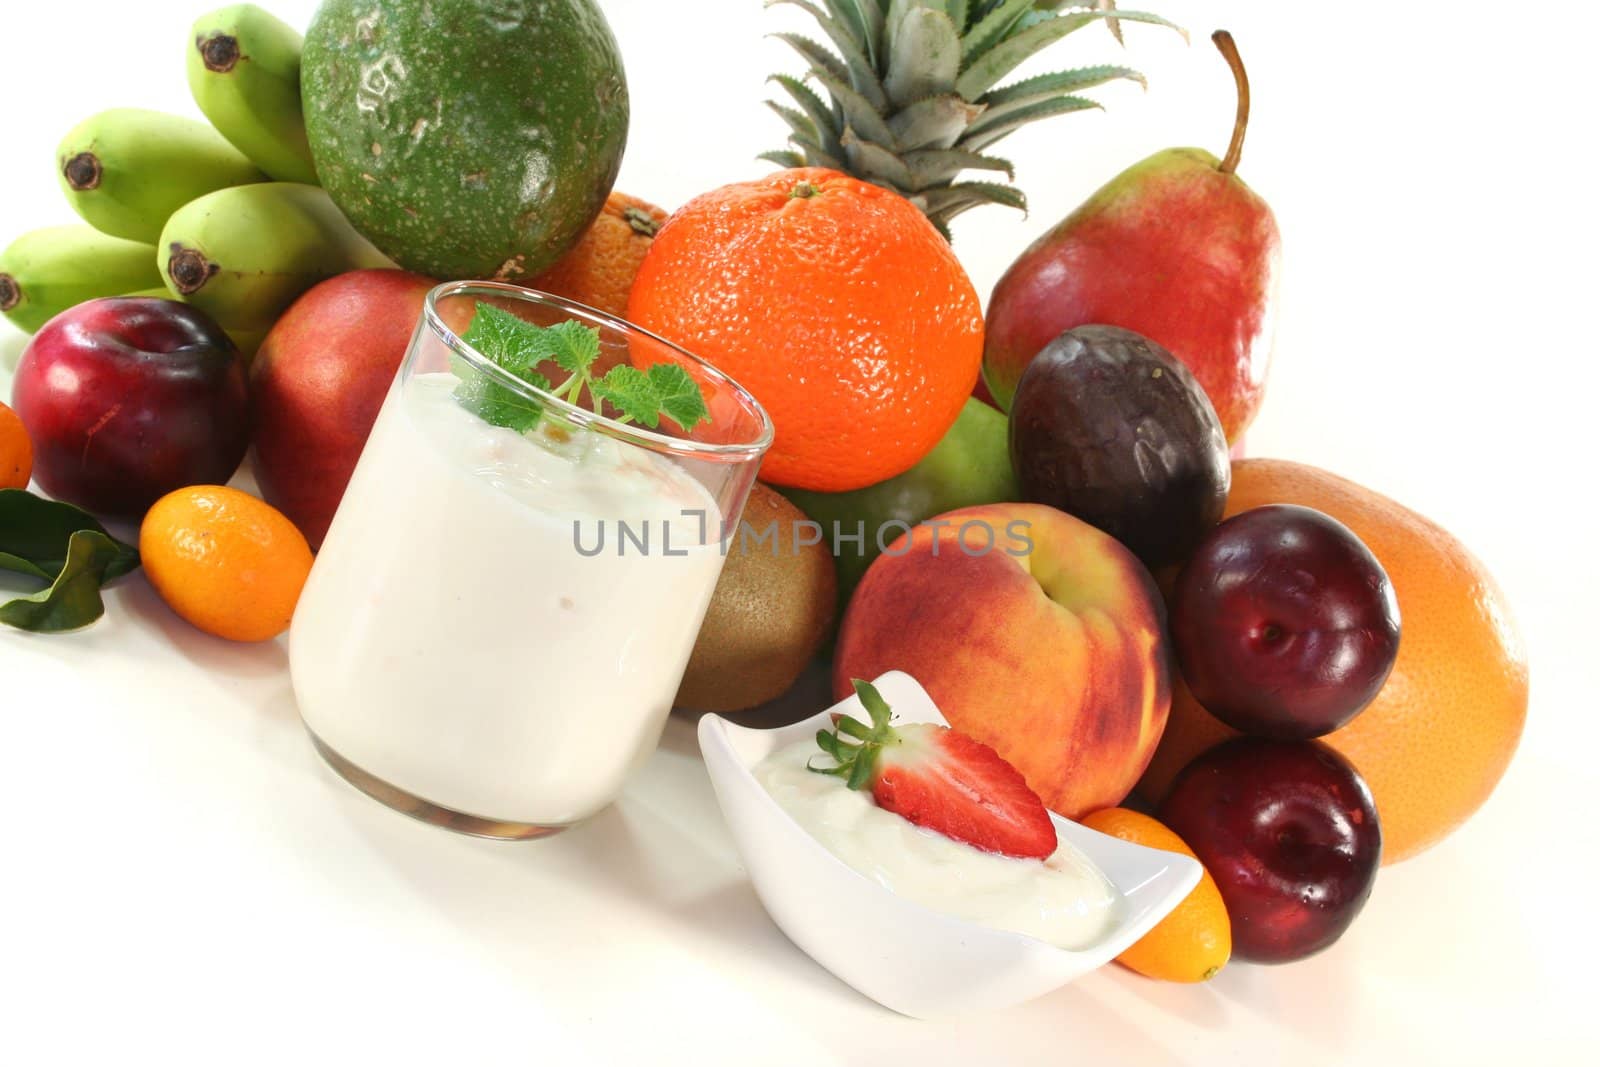 Fruit yogurt by discovery